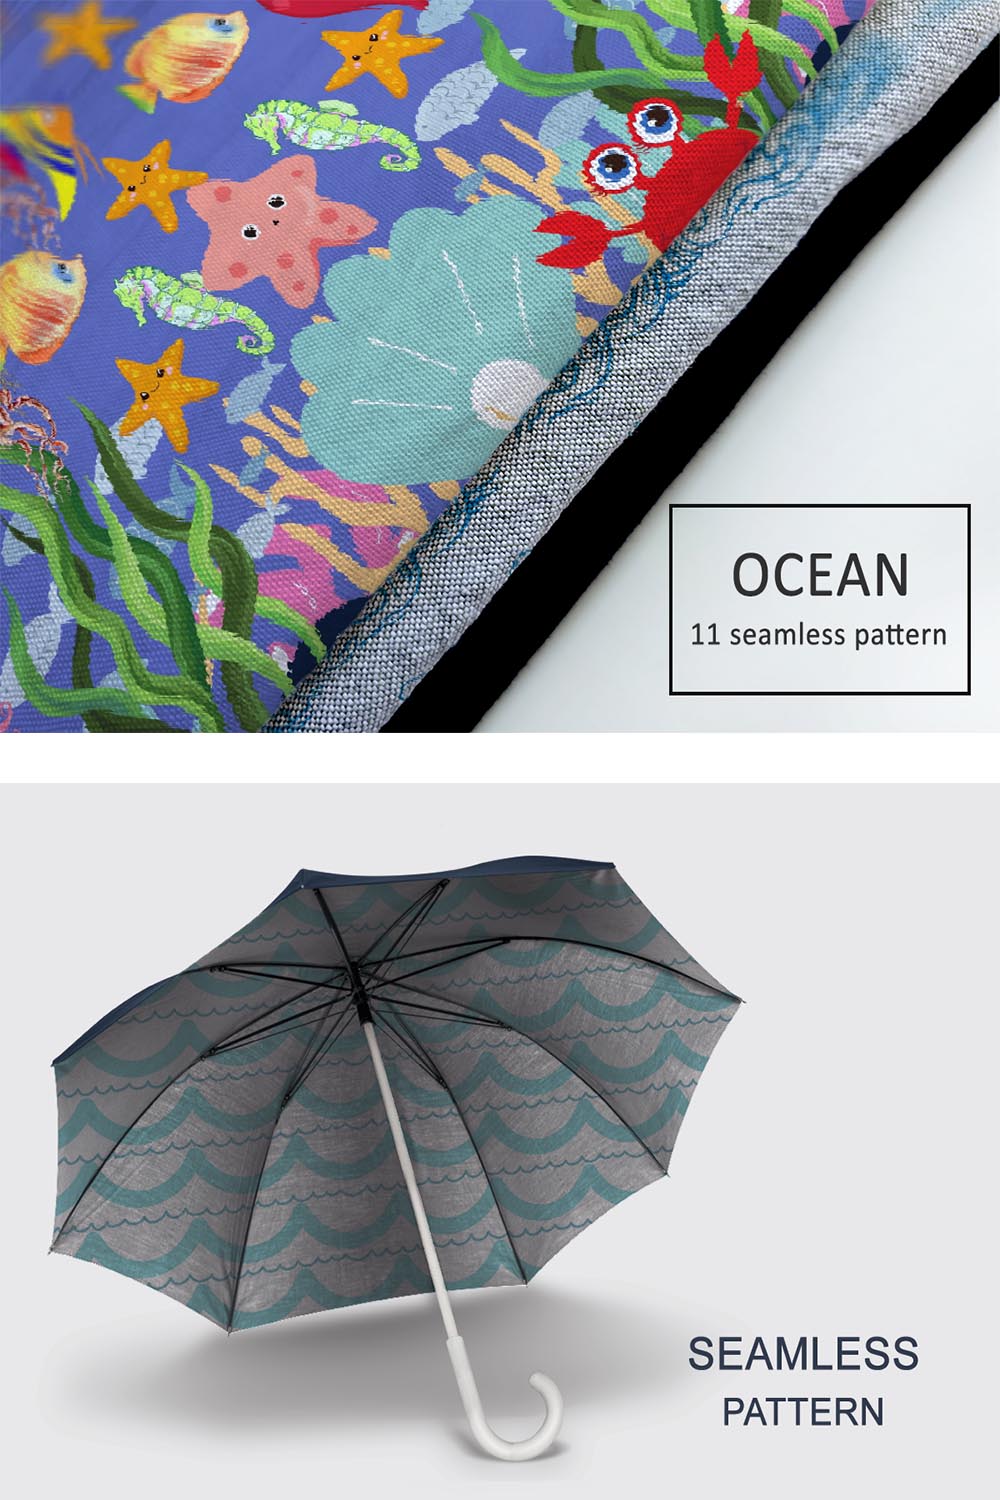 Ocean Seamless Pattern Design pinterest image.